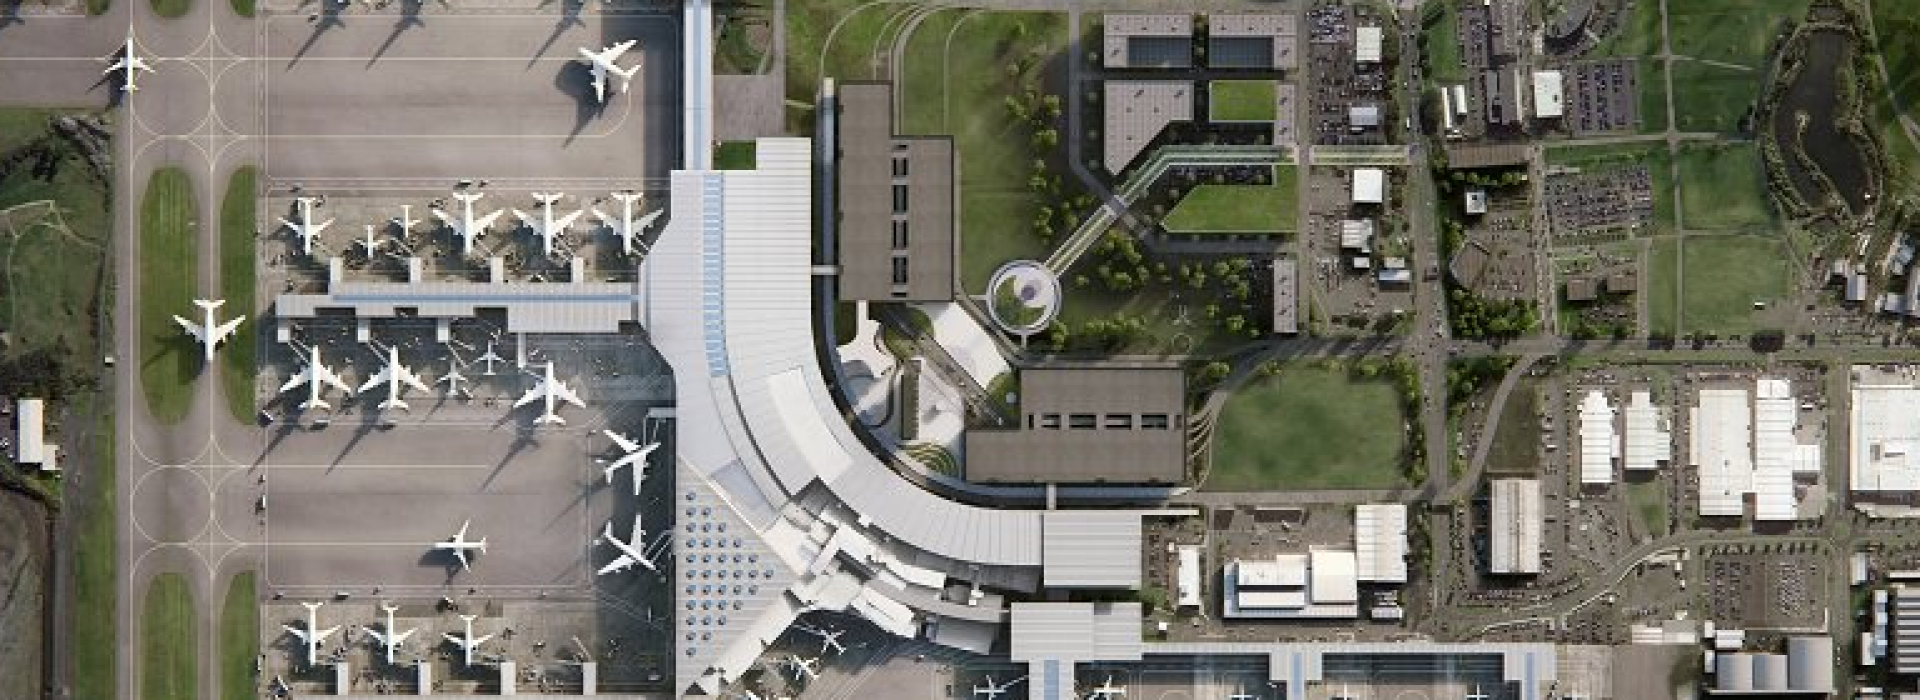 Auckland International Airport 